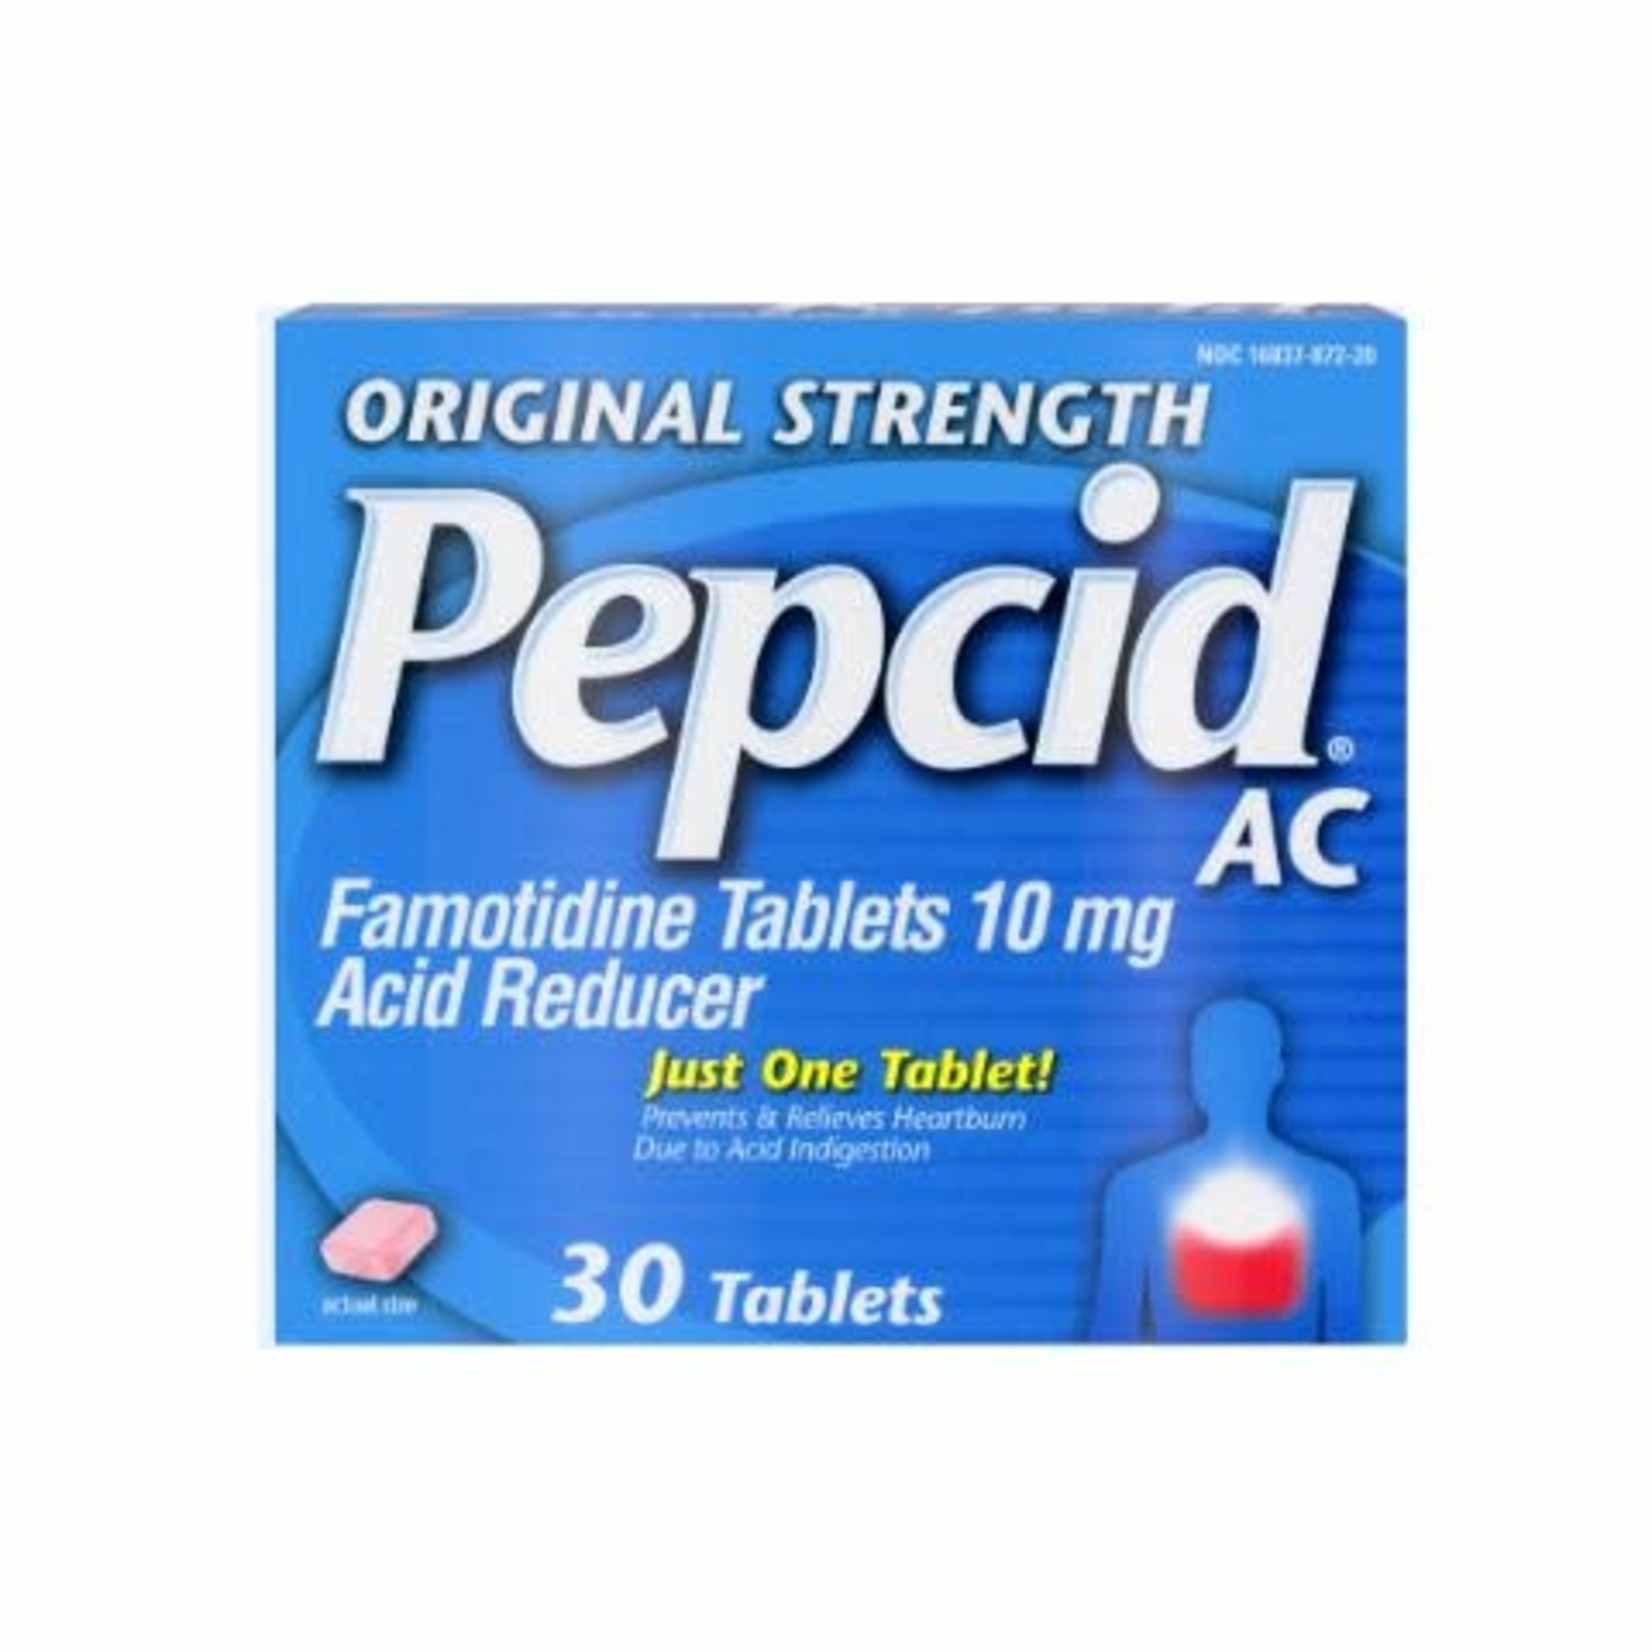 Pepcid Original strength Pepcid AC tablets 10mg 30ct